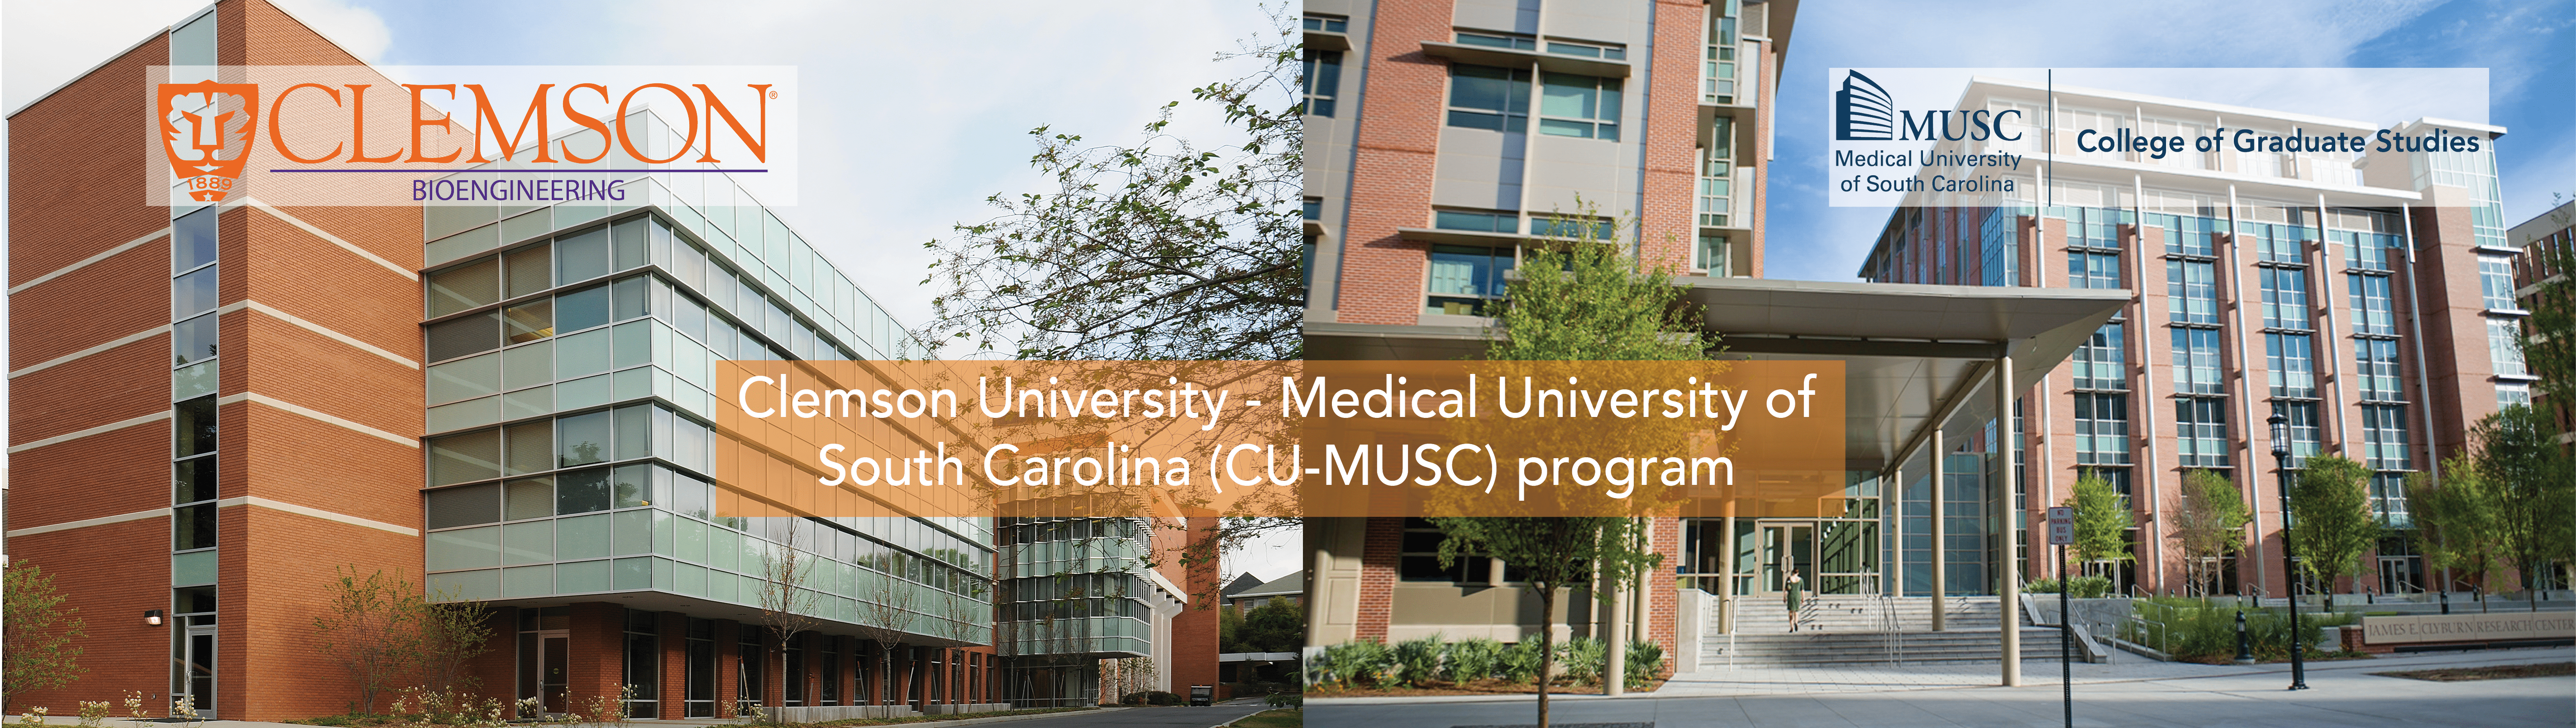 Medical University of South Carolina (MUSC) on X: Brett and